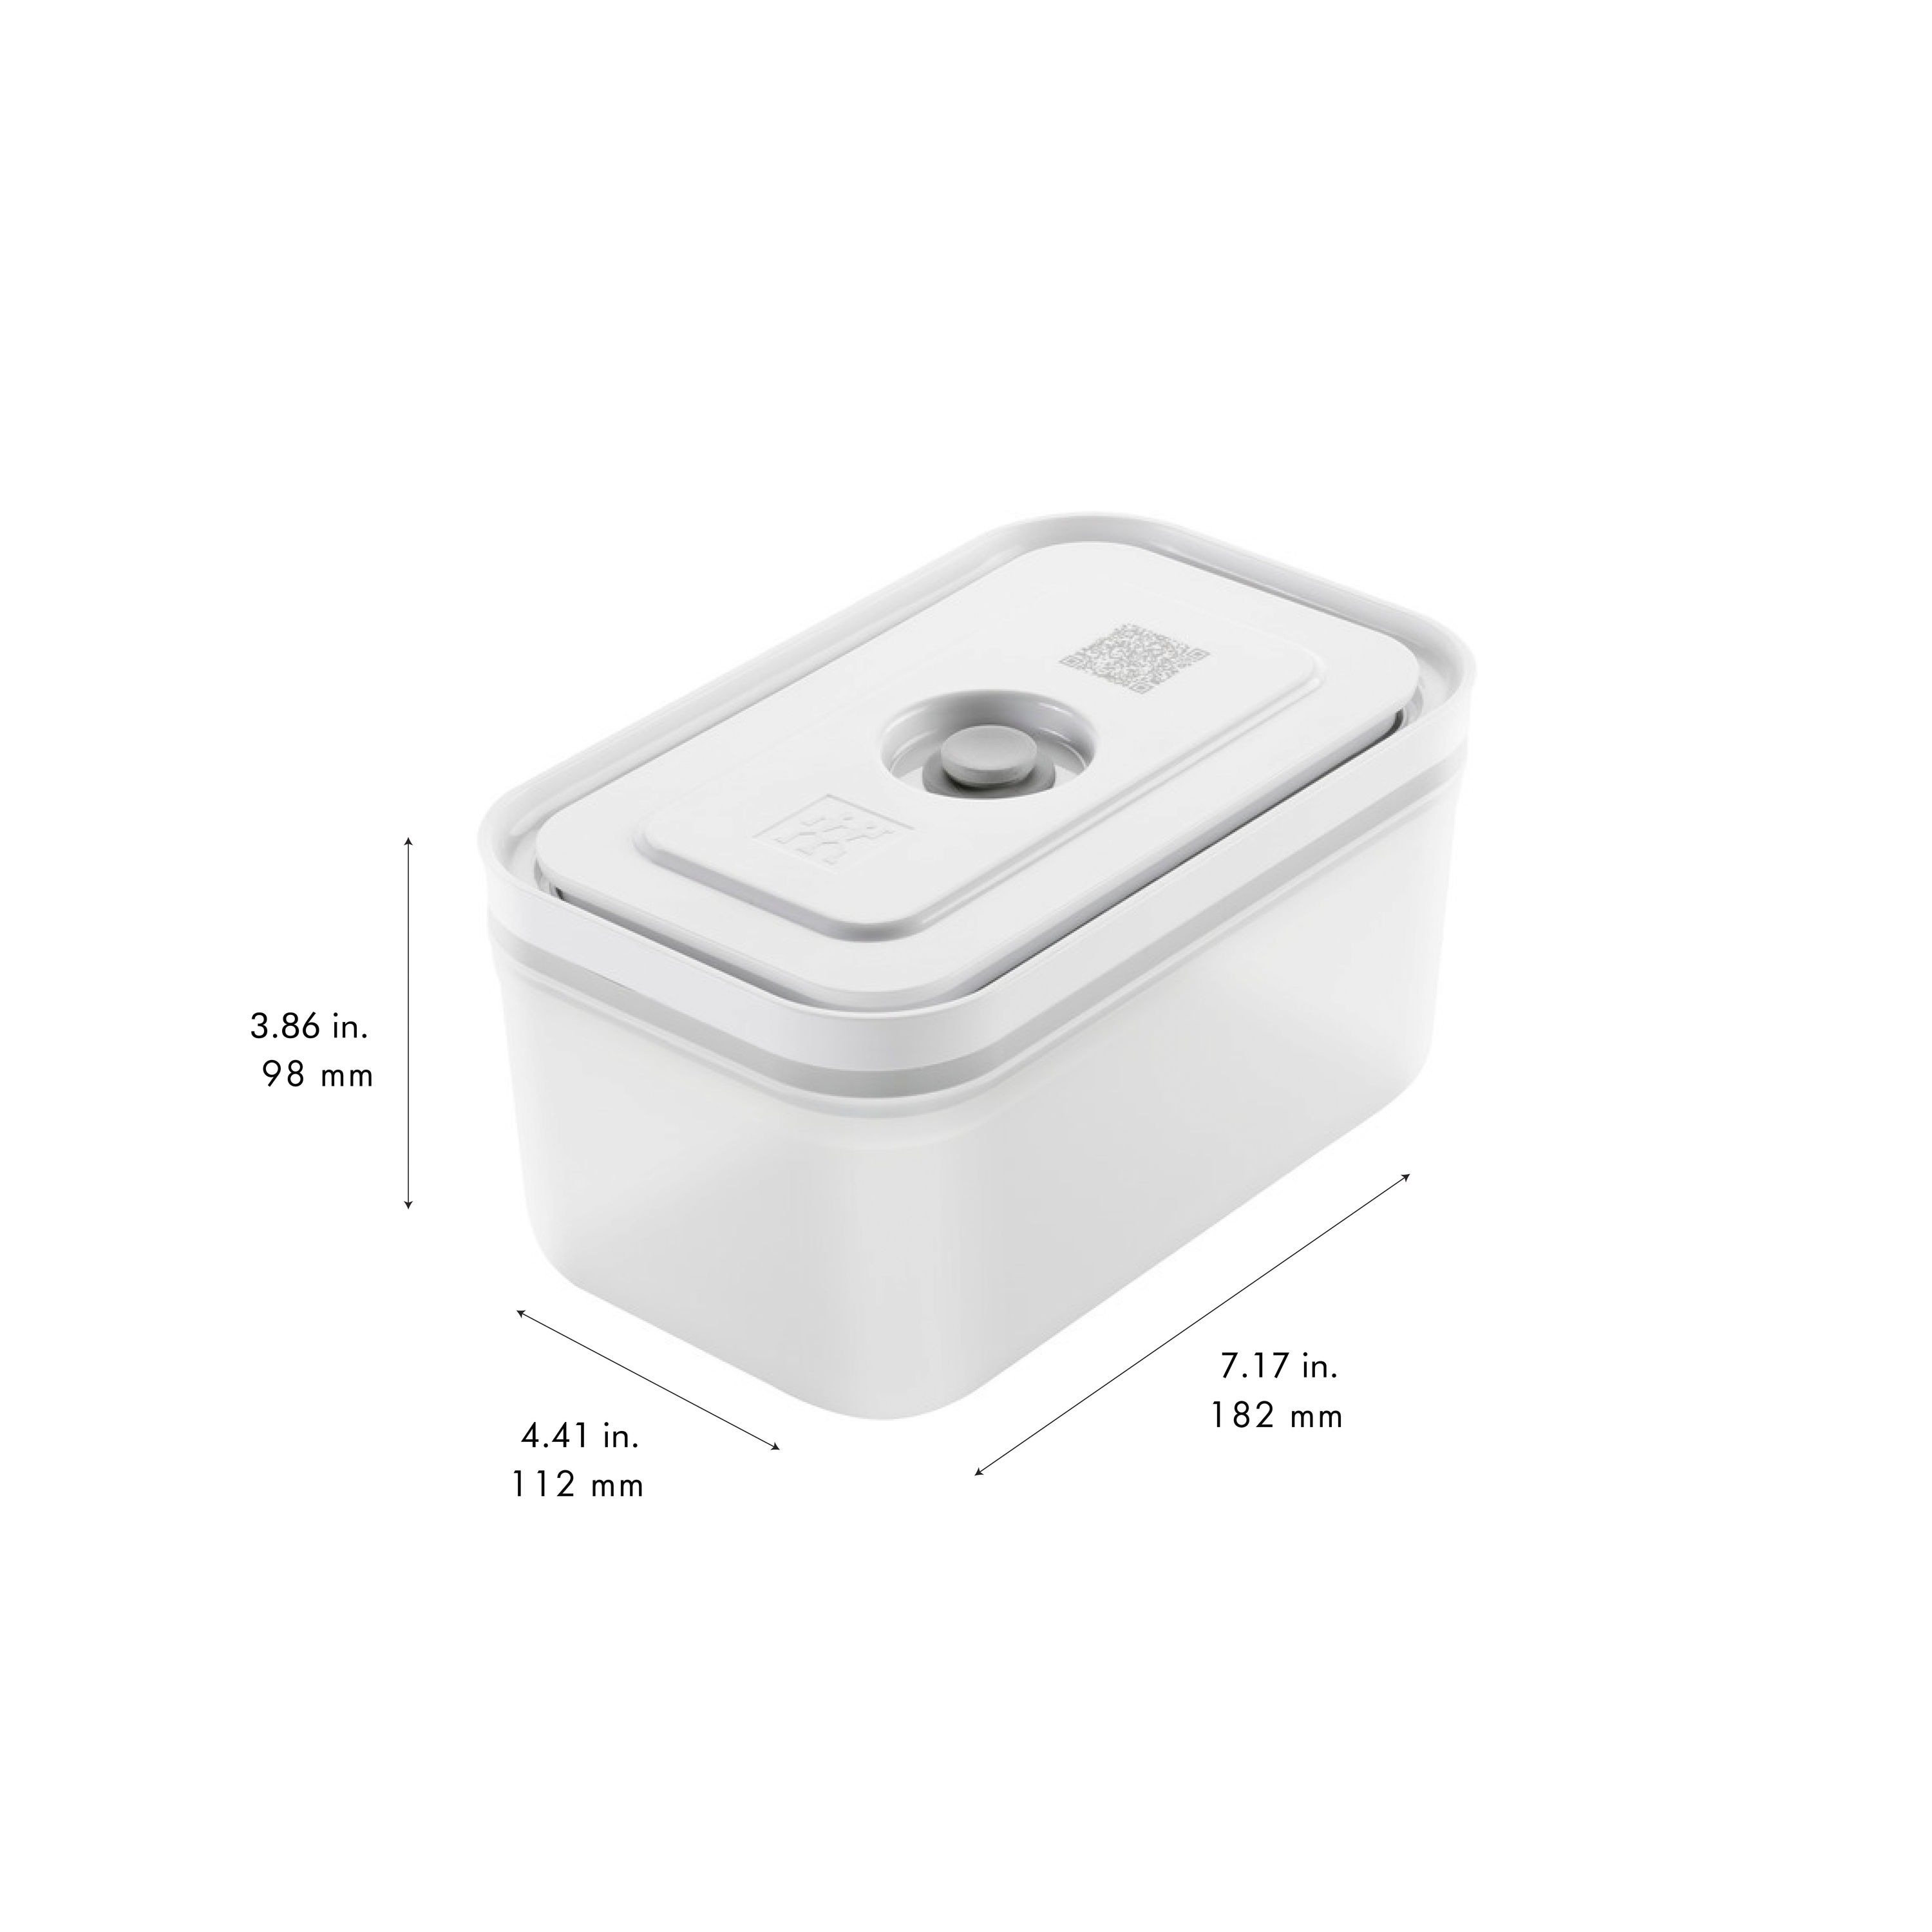 Vacuum sealed canister household fresh-keeping box refrigerator